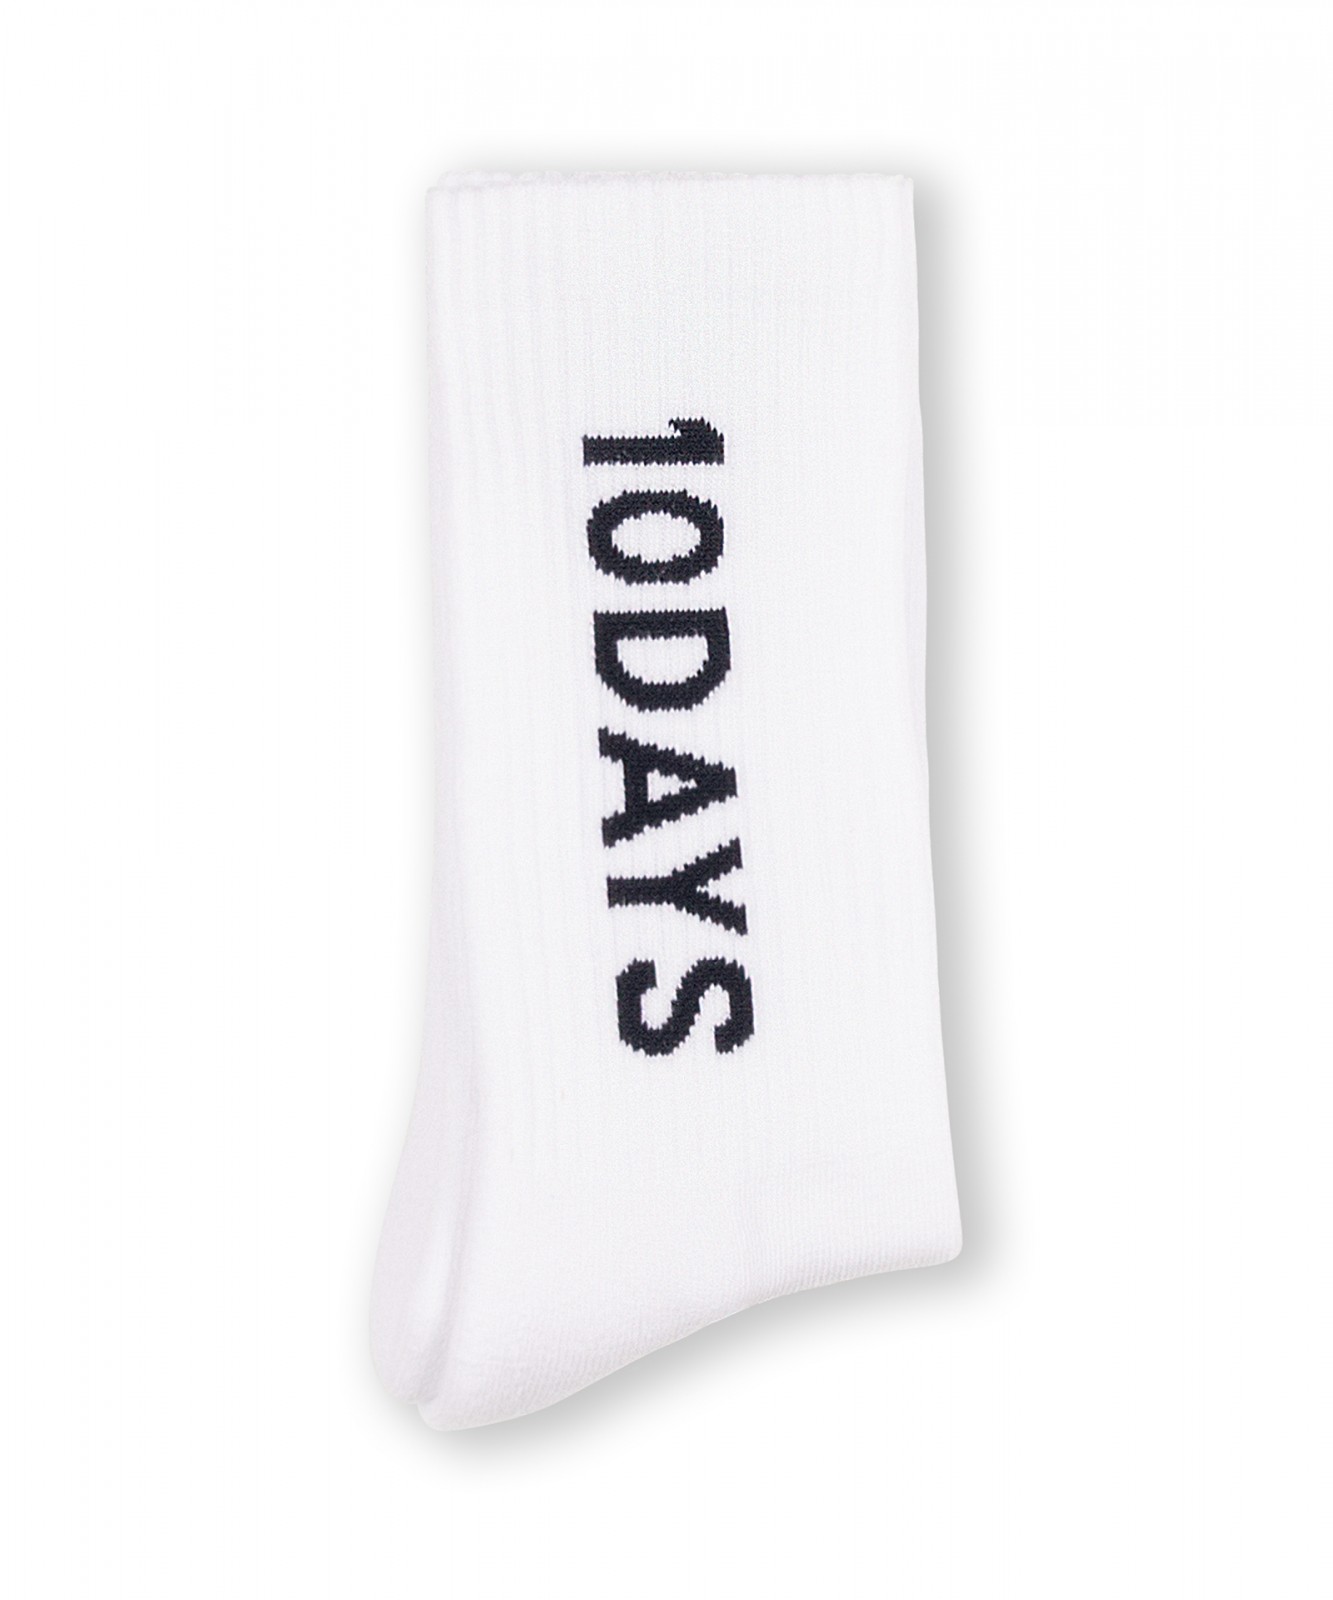 Socken "10 Days"